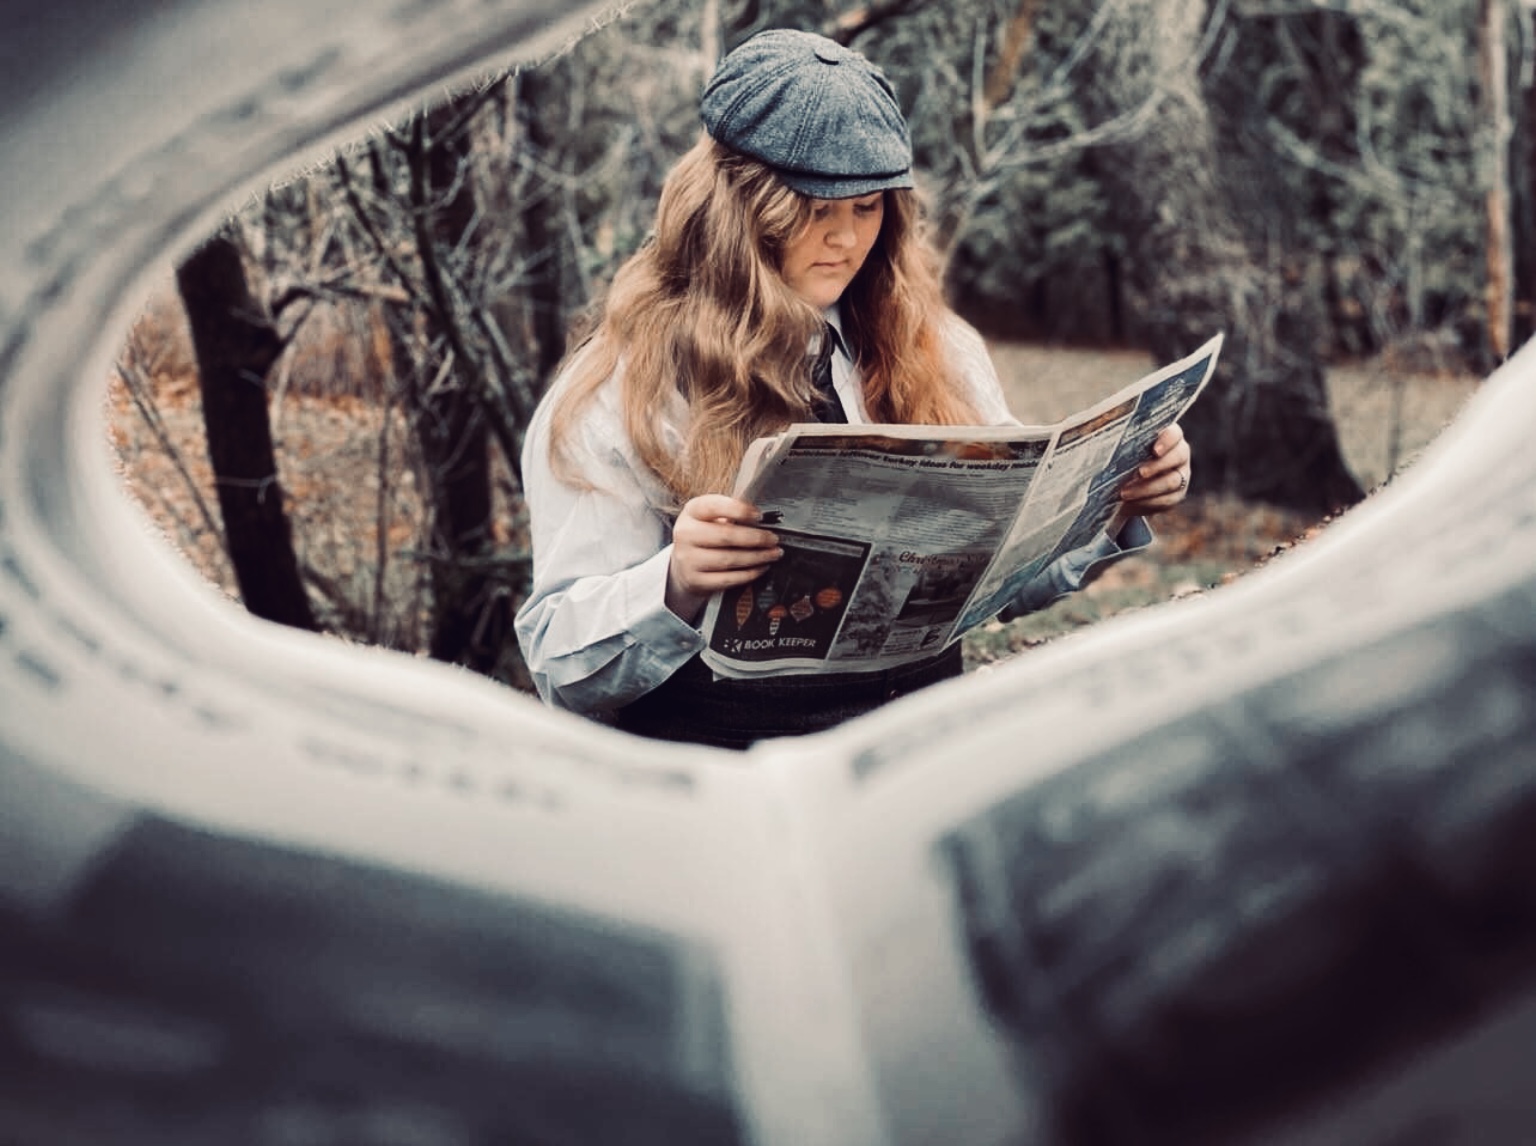 camera looking through newspaper at woman reading newspaper